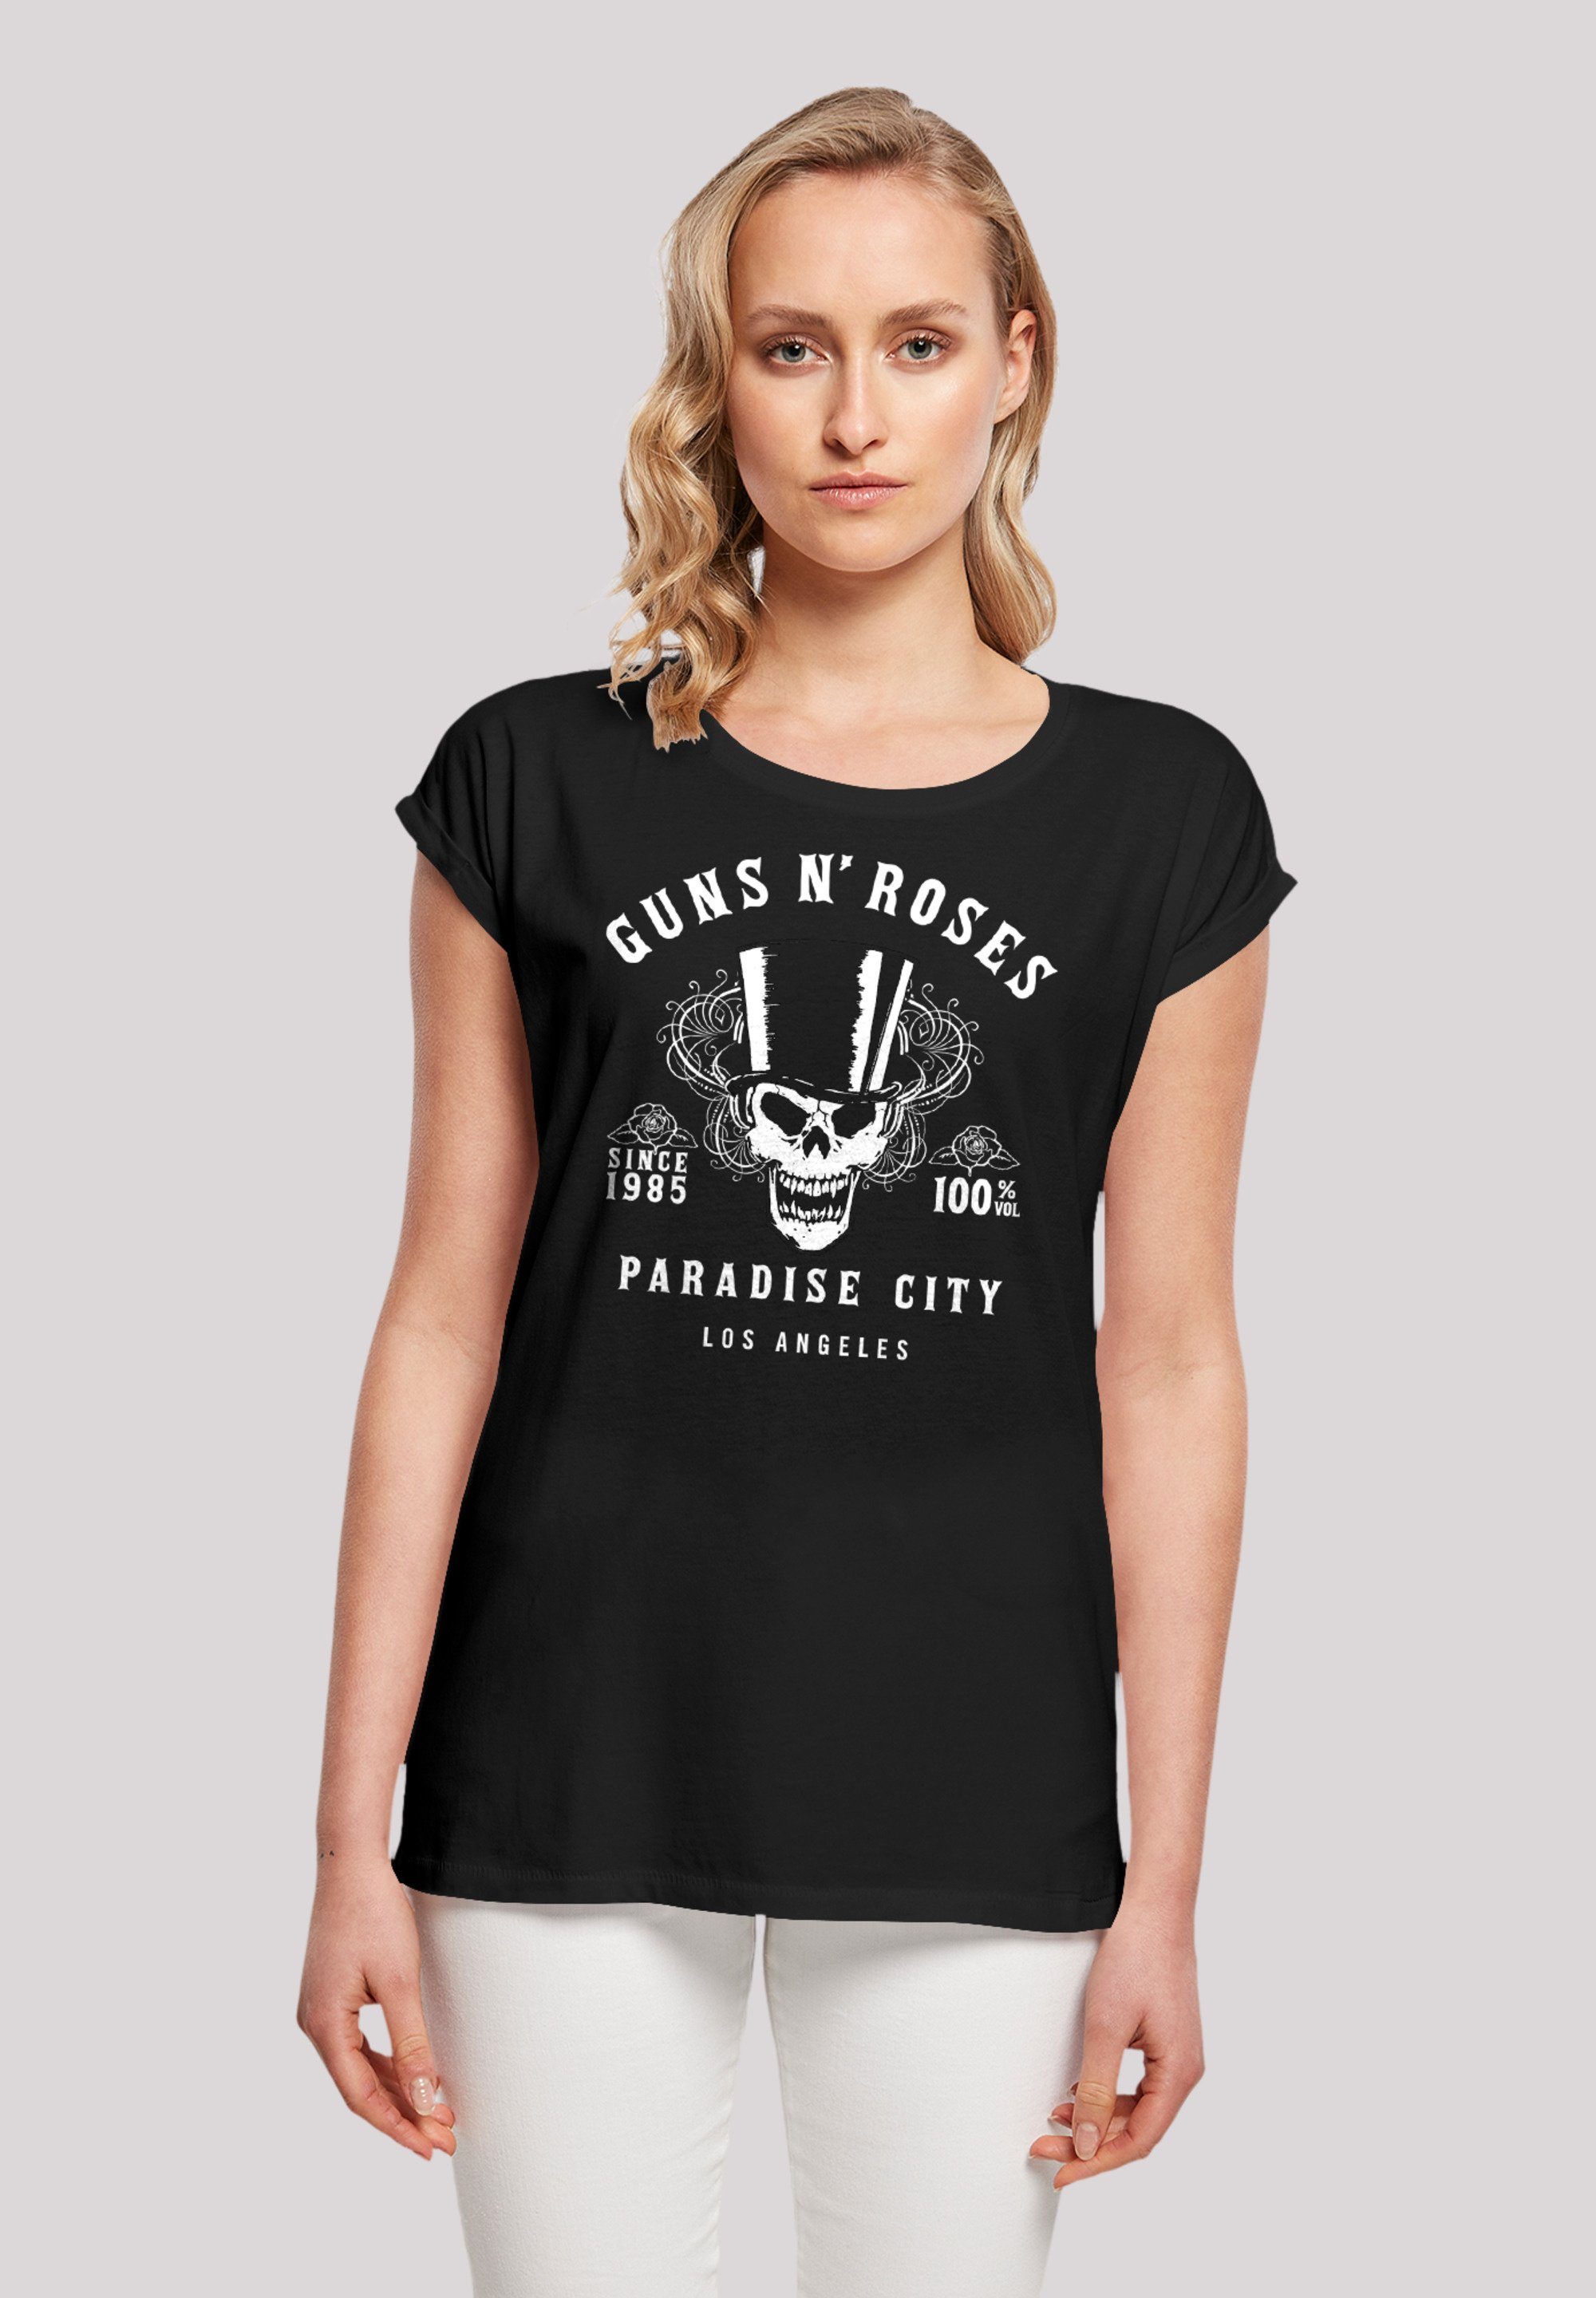 Band Premium schwarz Qualität F4NT4STIC Rock Label Whiskey Guns Roses 'n' T-Shirt